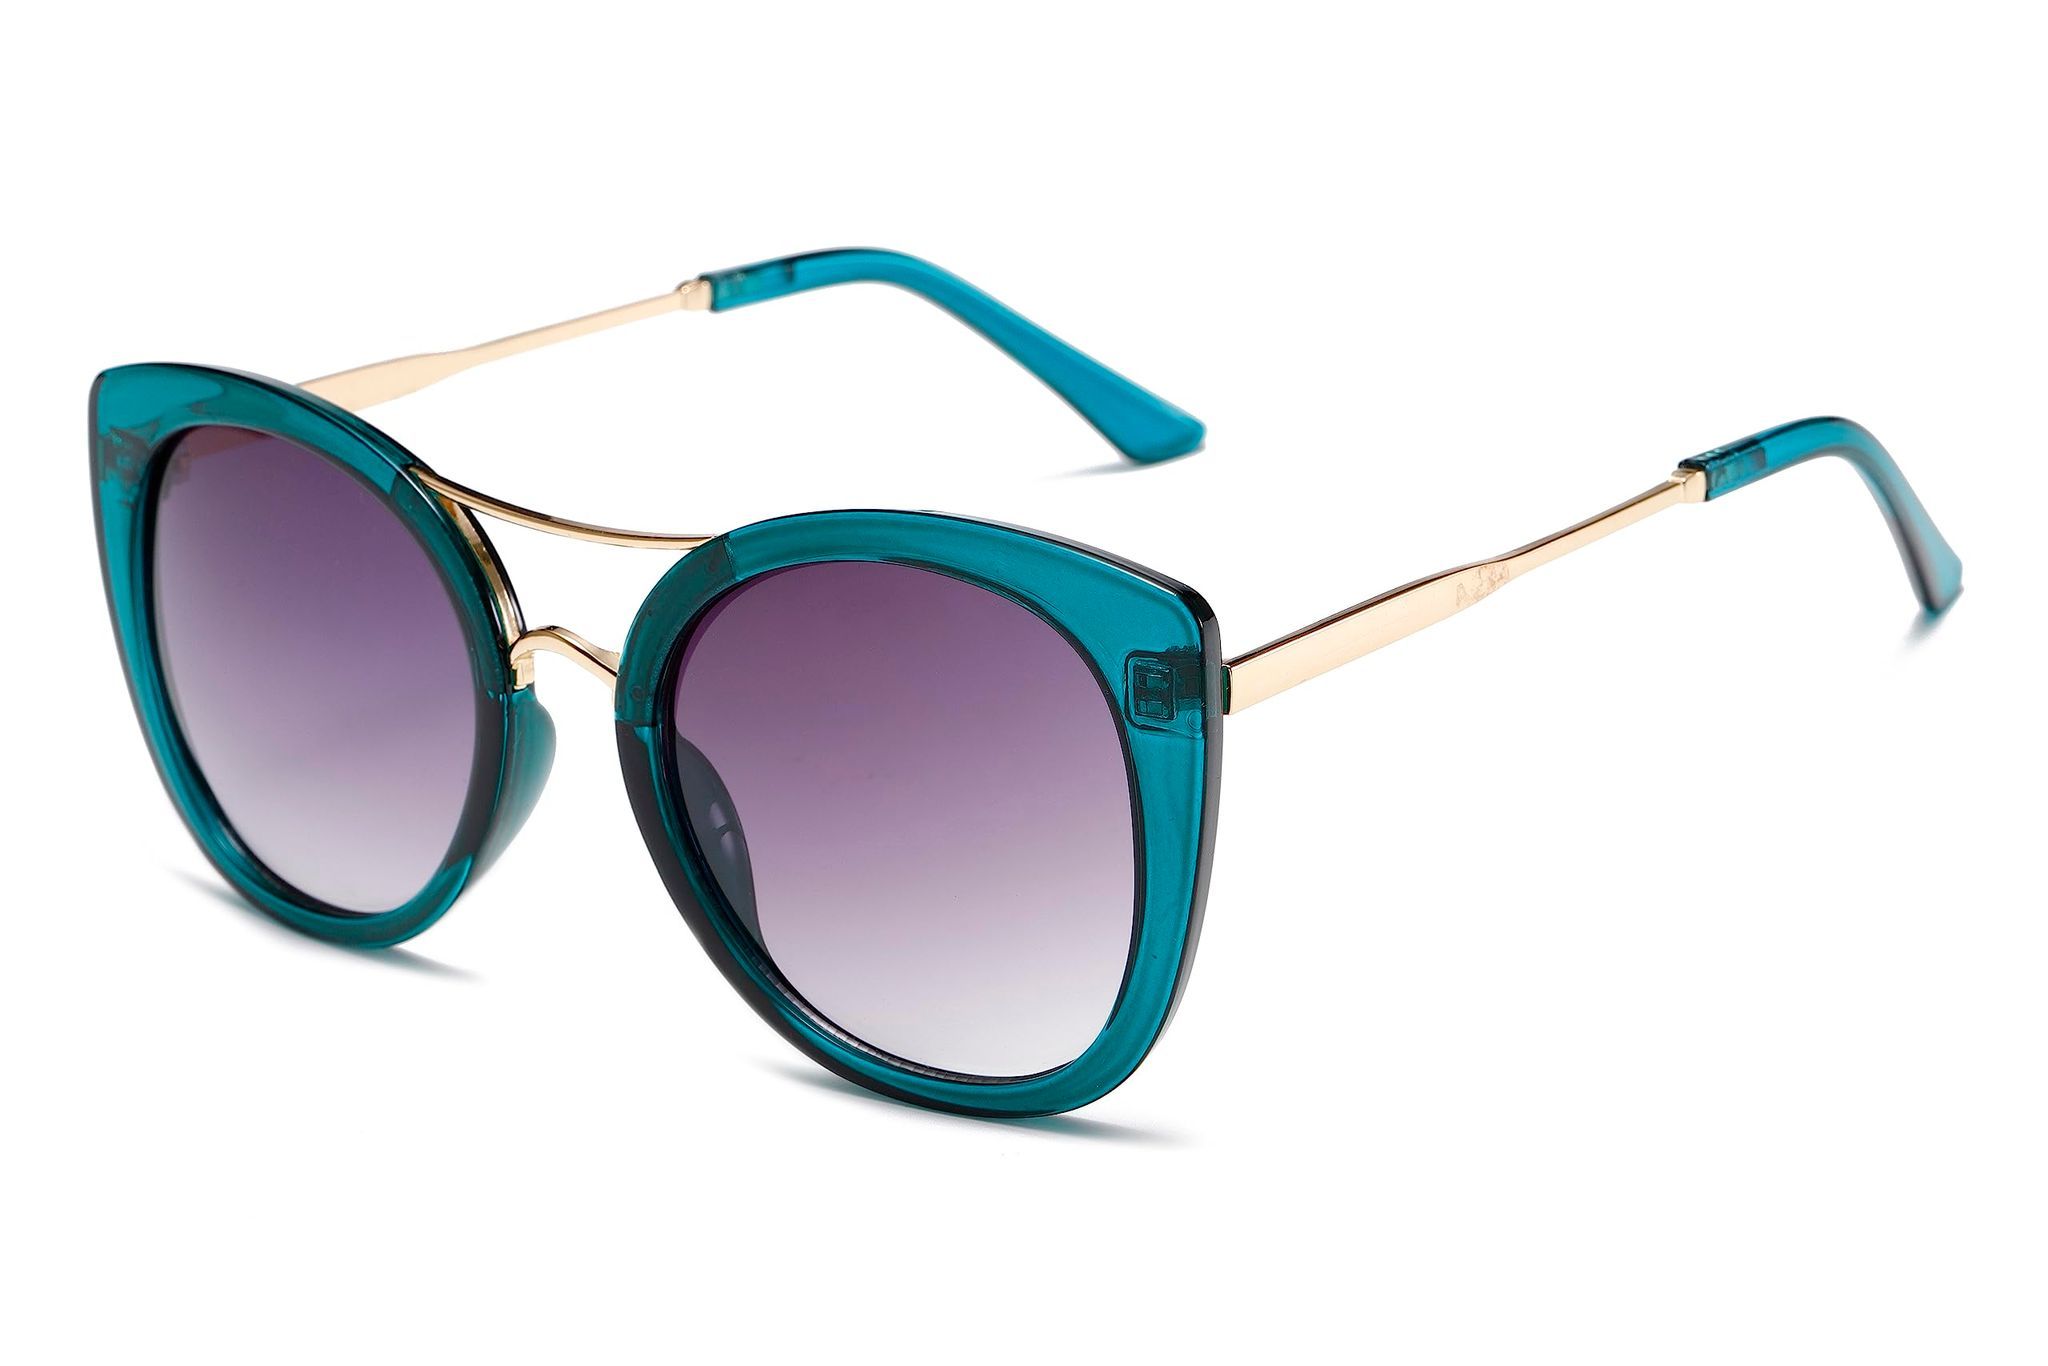 Eyenaks Cateye Sunglasses for Women | Premium Metal and PC Finish | UV400 Protection | Pack of 1 (Blue)